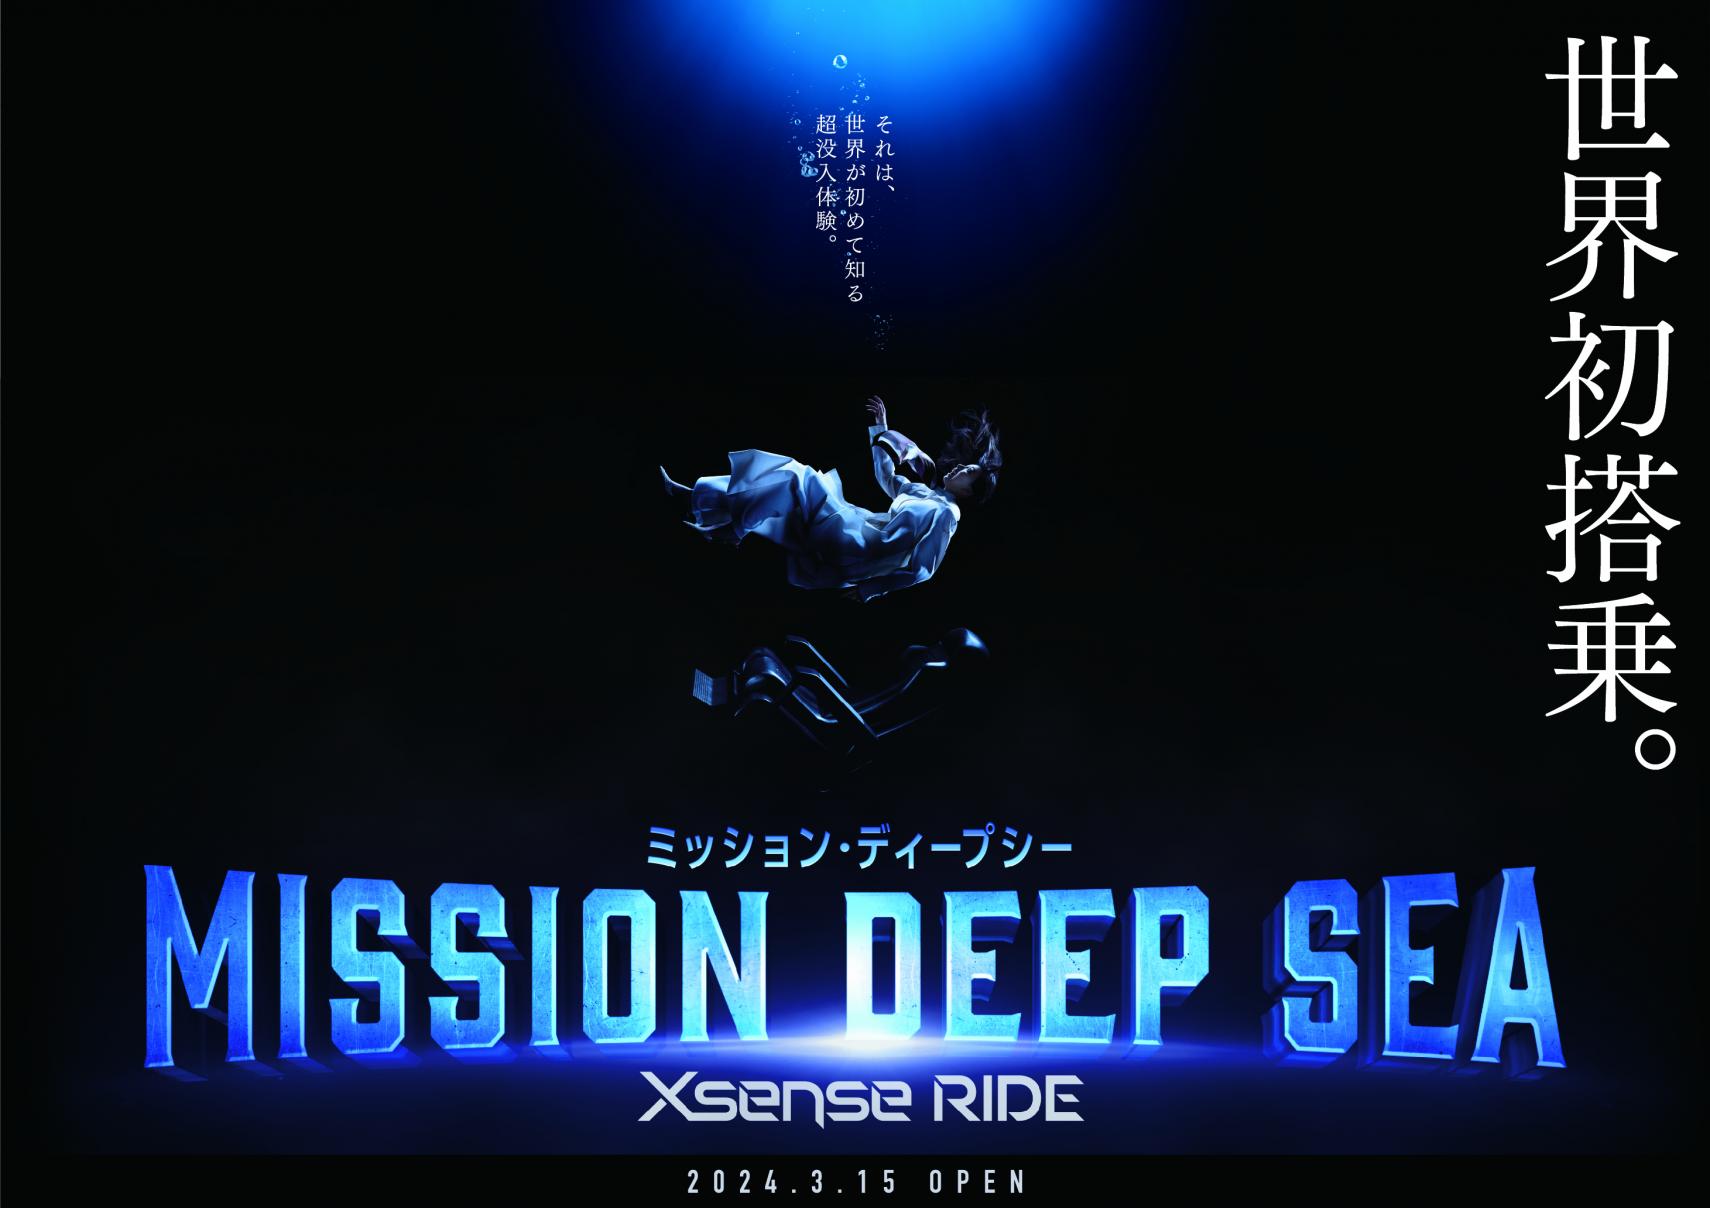 MISSION DEEP SEA Xsense RIDE-0